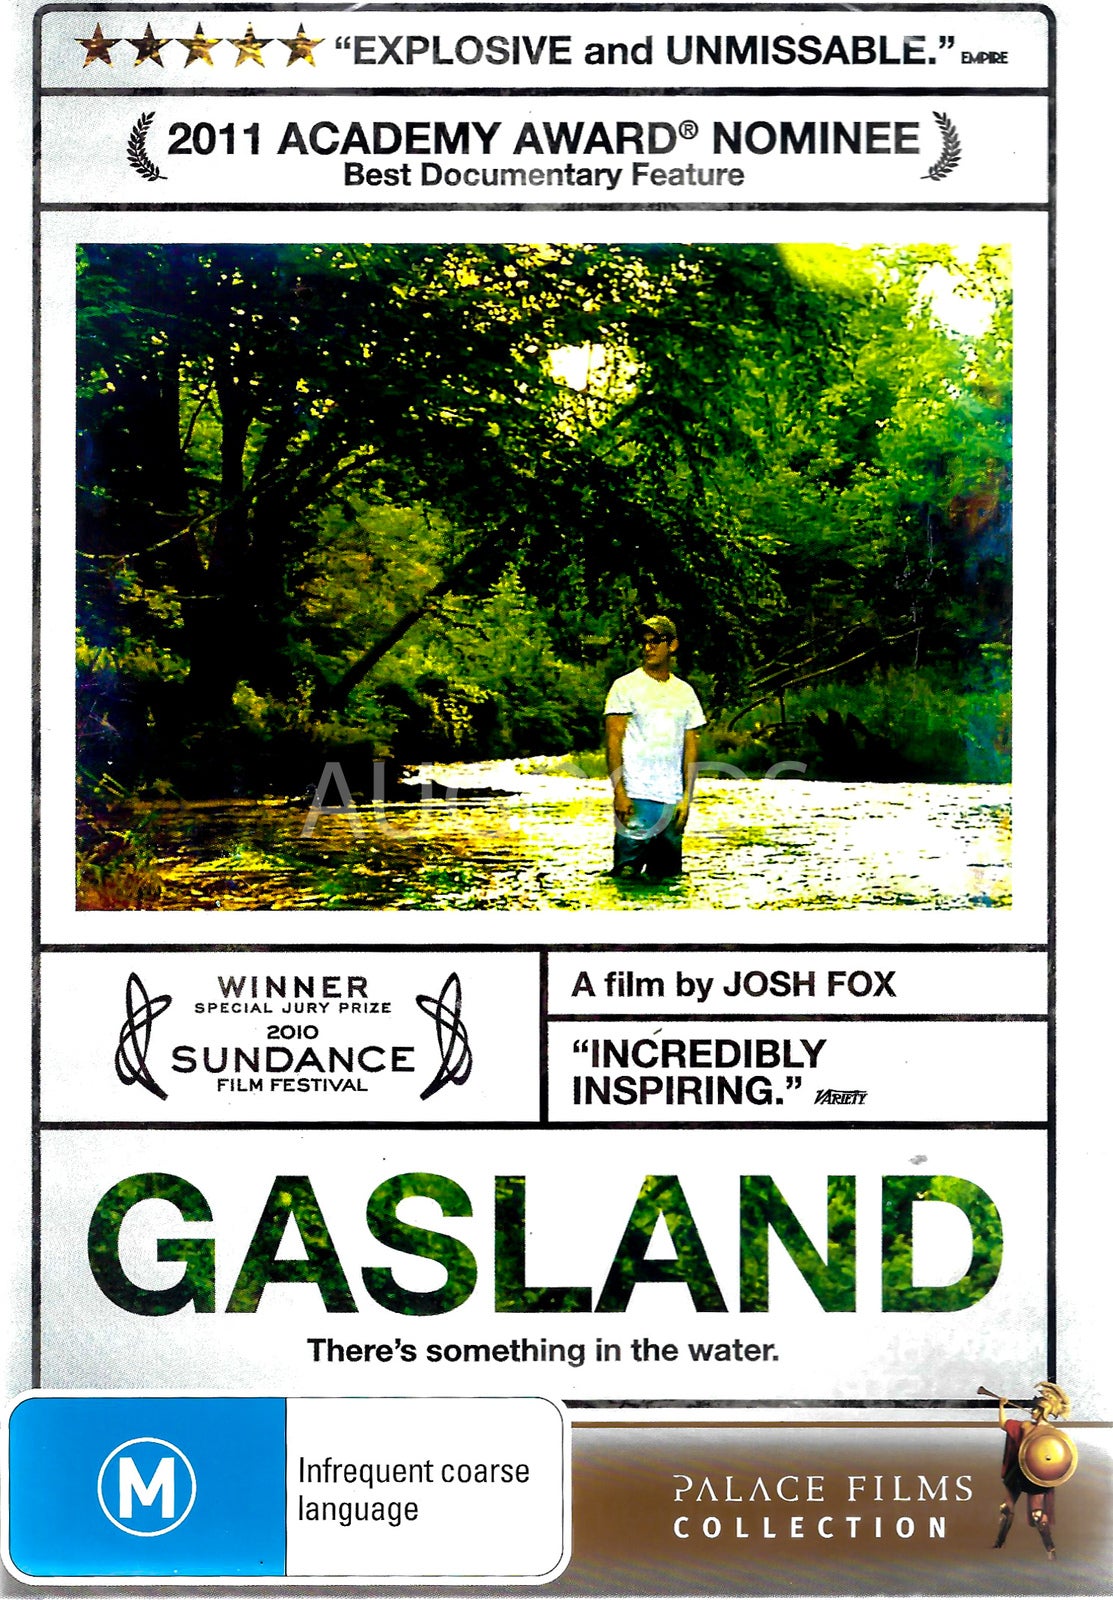 Gasland -Educational DVD Series Rare Aus Stock New Region 4